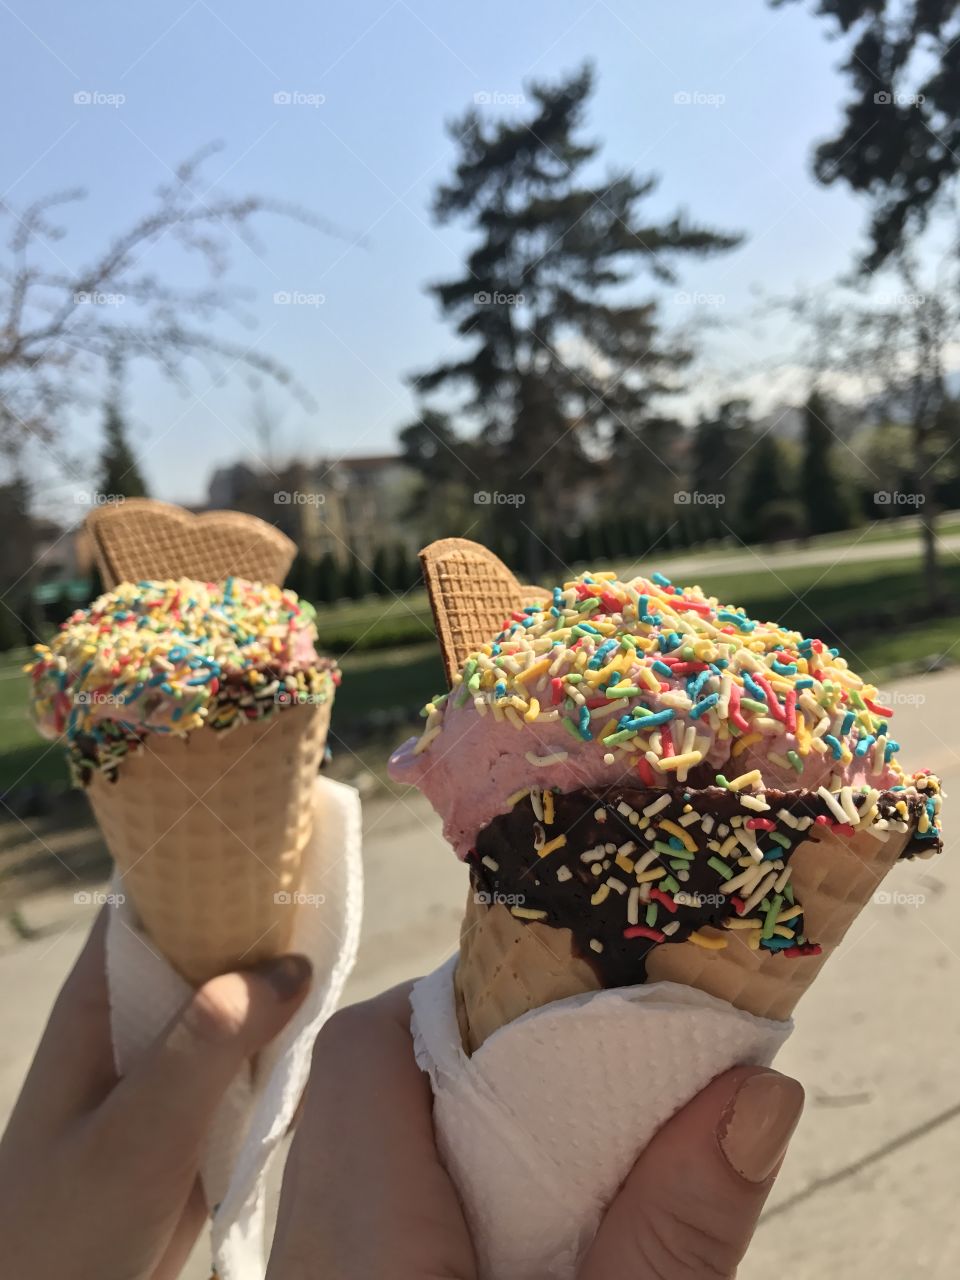 Ice-cream & friends